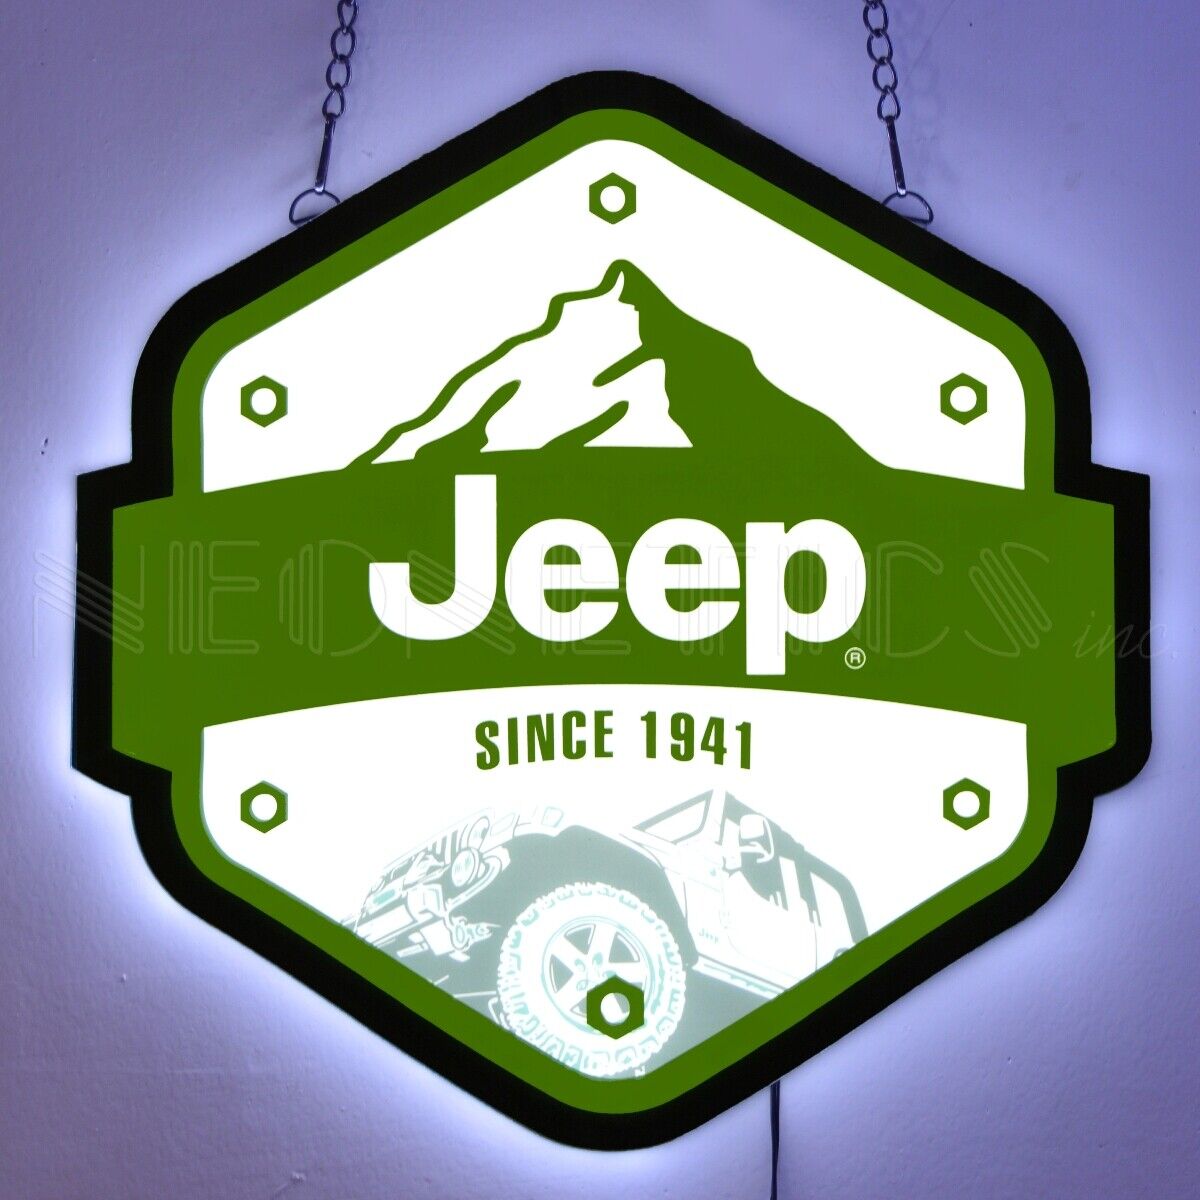 Slim Led - Jeep Since 1941 Slim Led Sign by Neonetics   7LEDJP